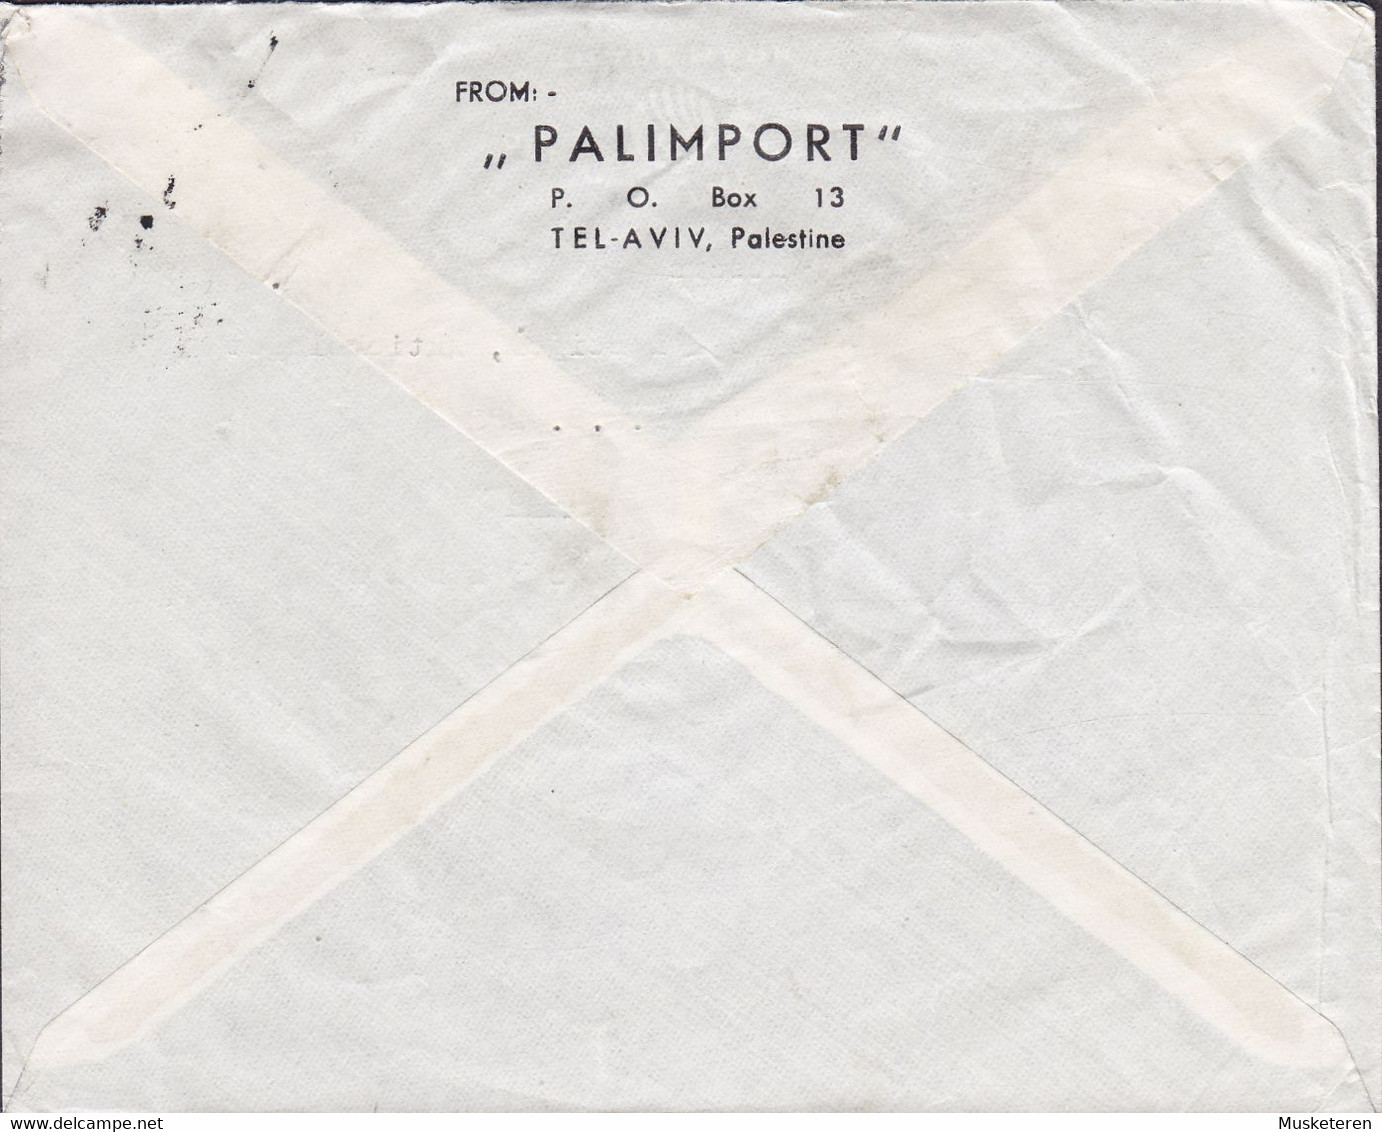 Palestine Airmail Par Avion 'PALIMPORT' TEL-AVIV Cover Brief 1946 MALMÖ Sweden (2 Scans) - Palestine